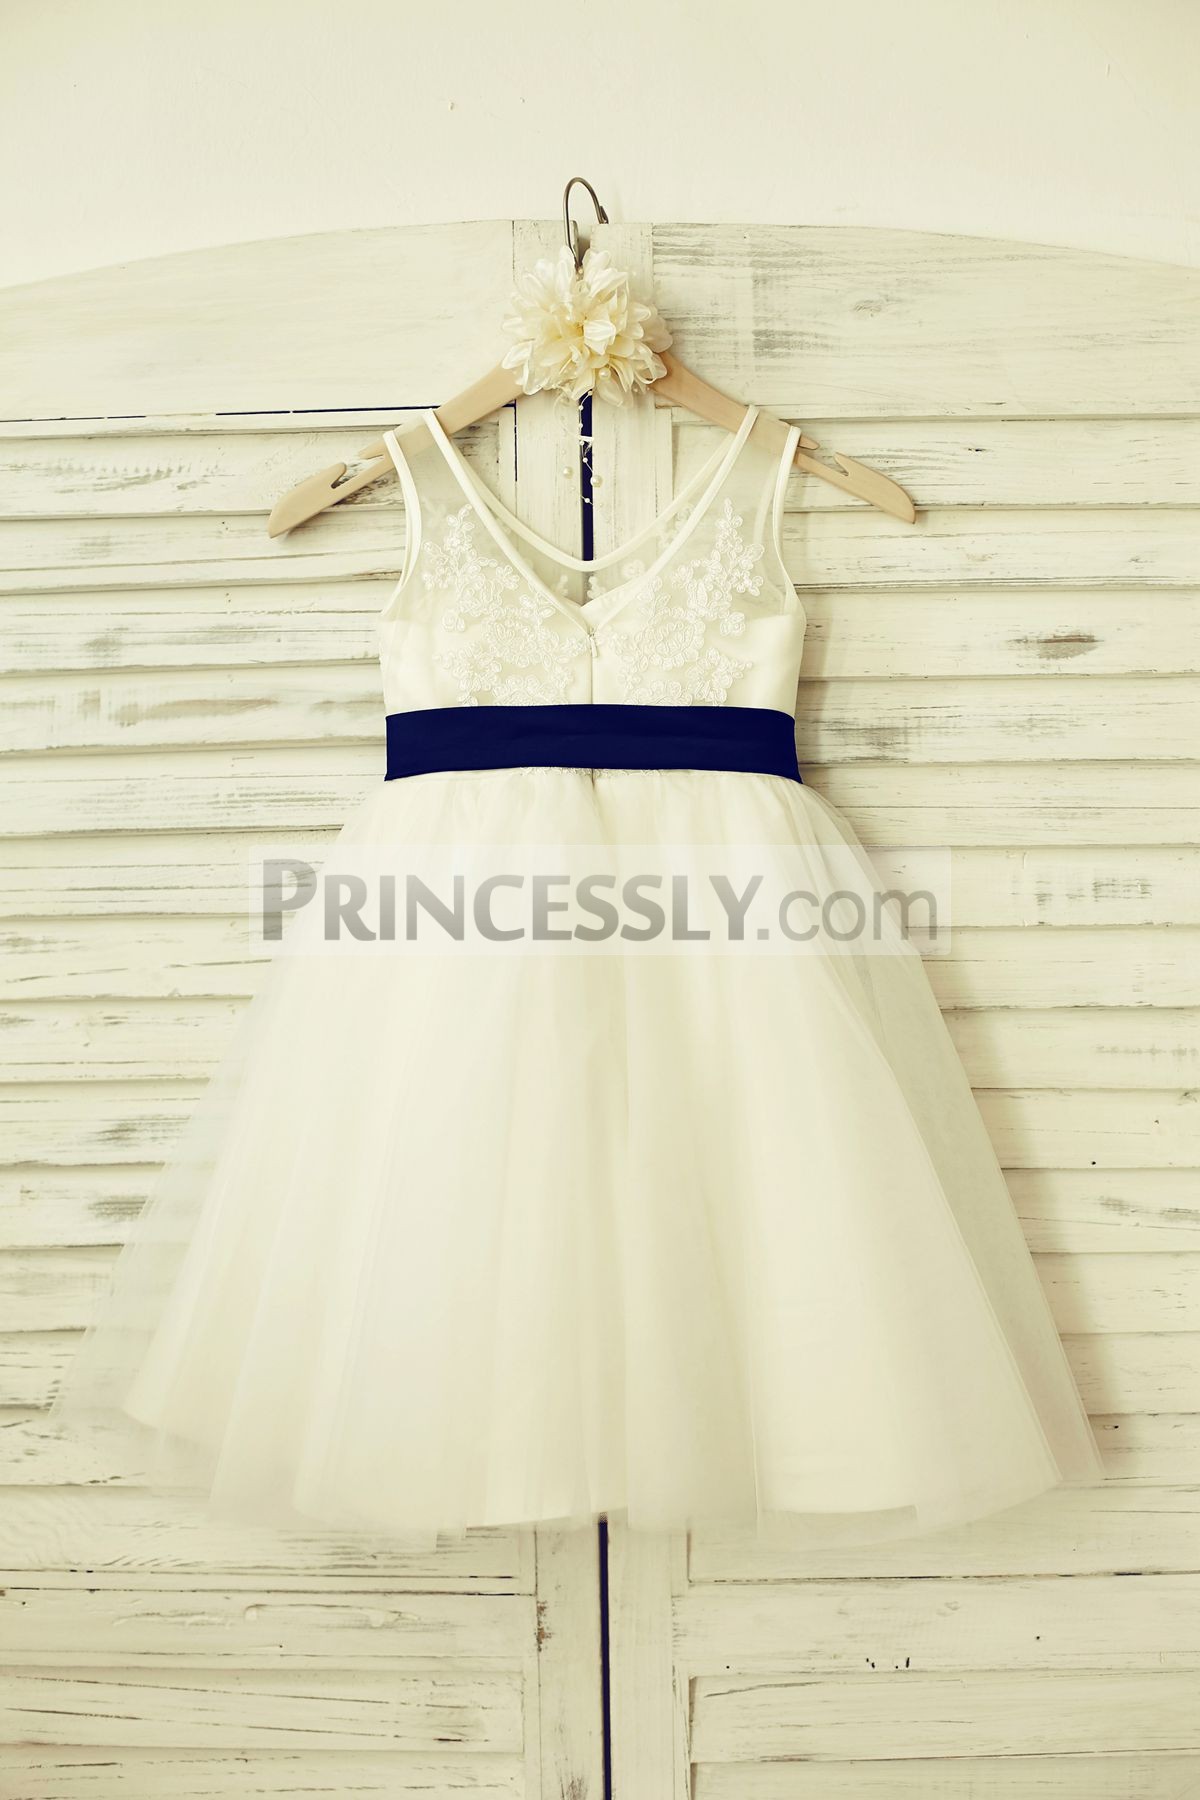 Princess ivory wedding baby girl dress with navy blue sash